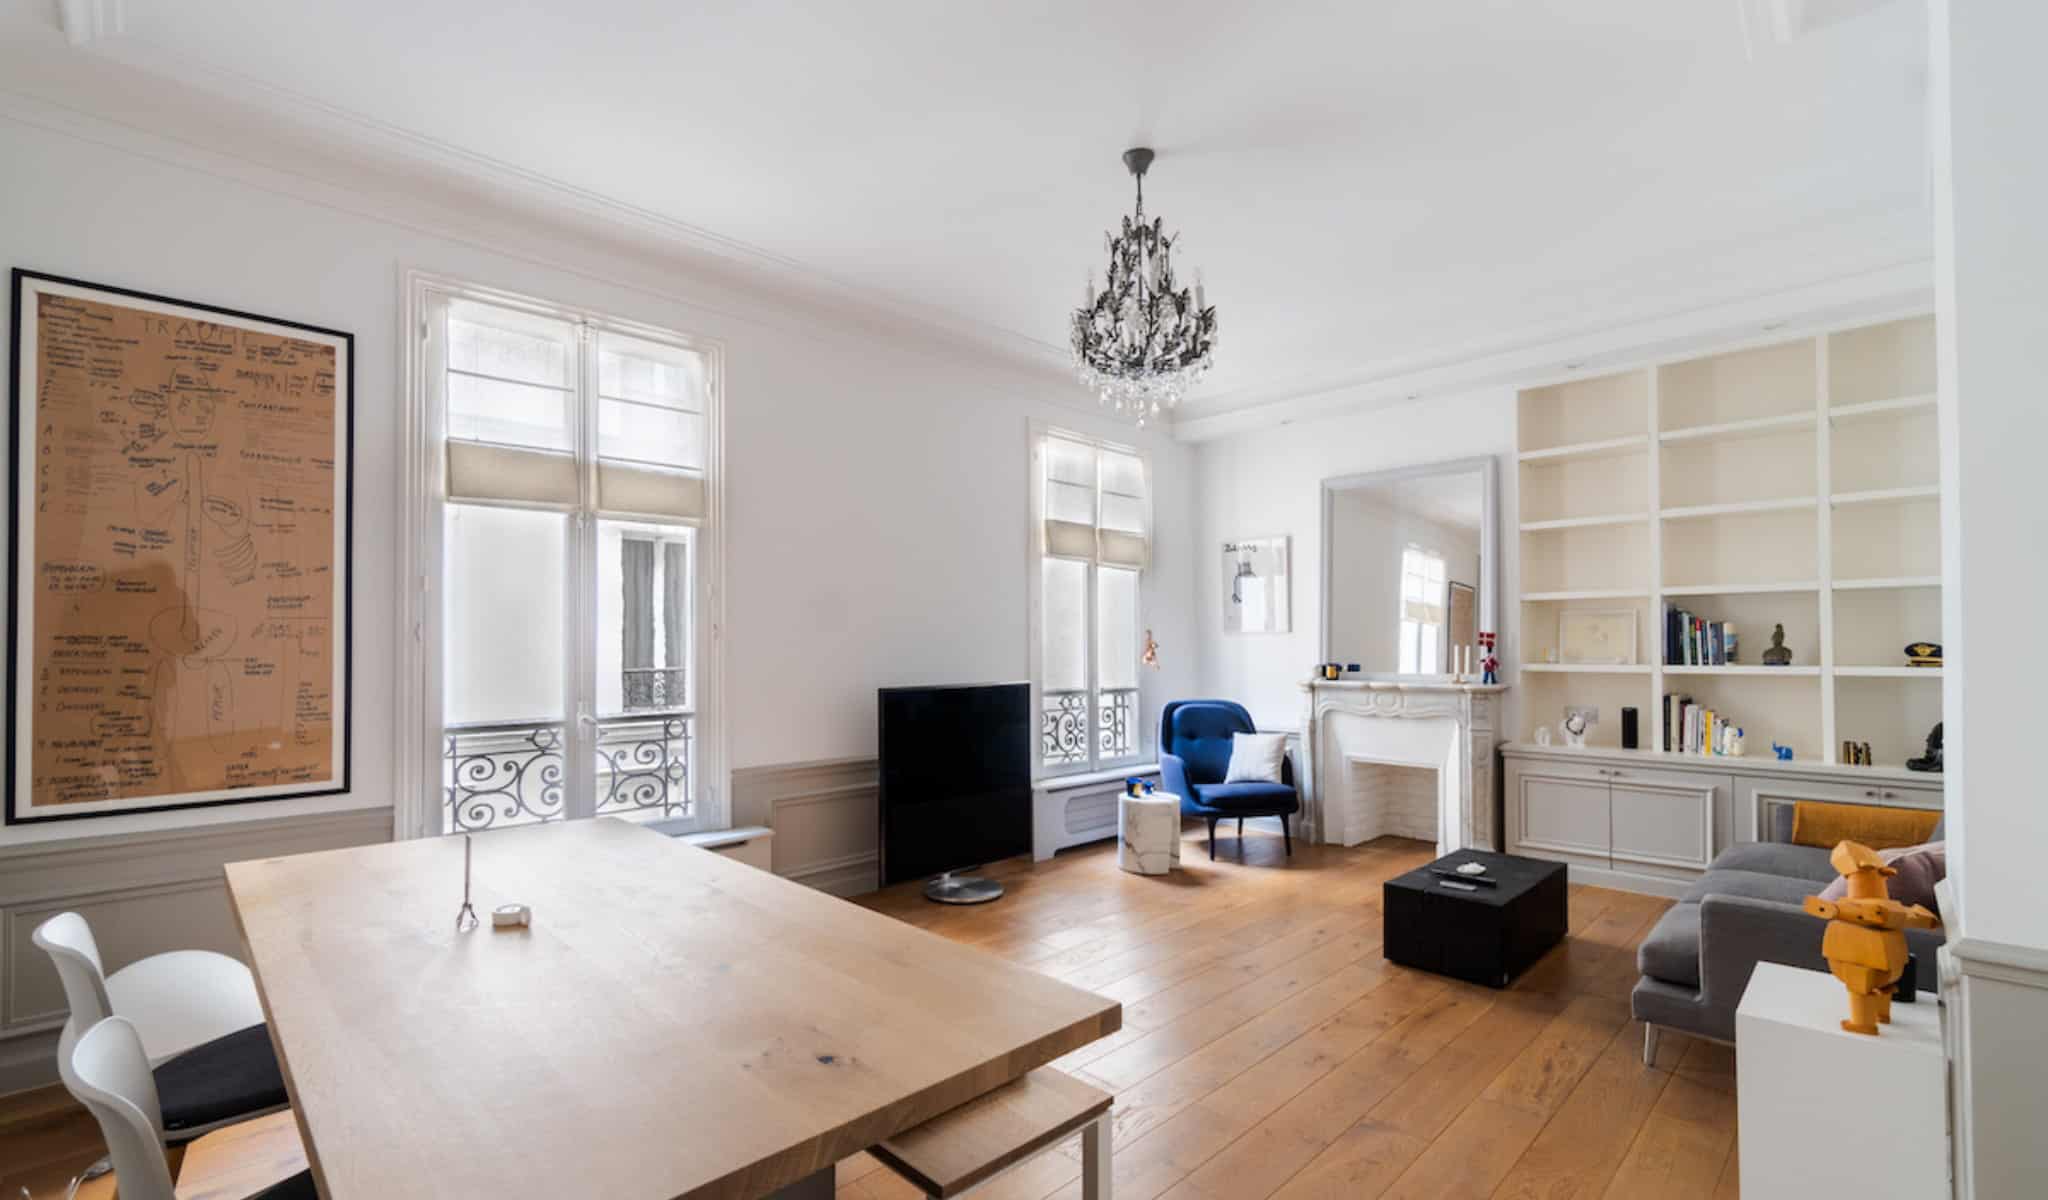 Paris Apartments for Sale: Musée d’Orsay, St. Germain, Montparnasse, and the Pompidou